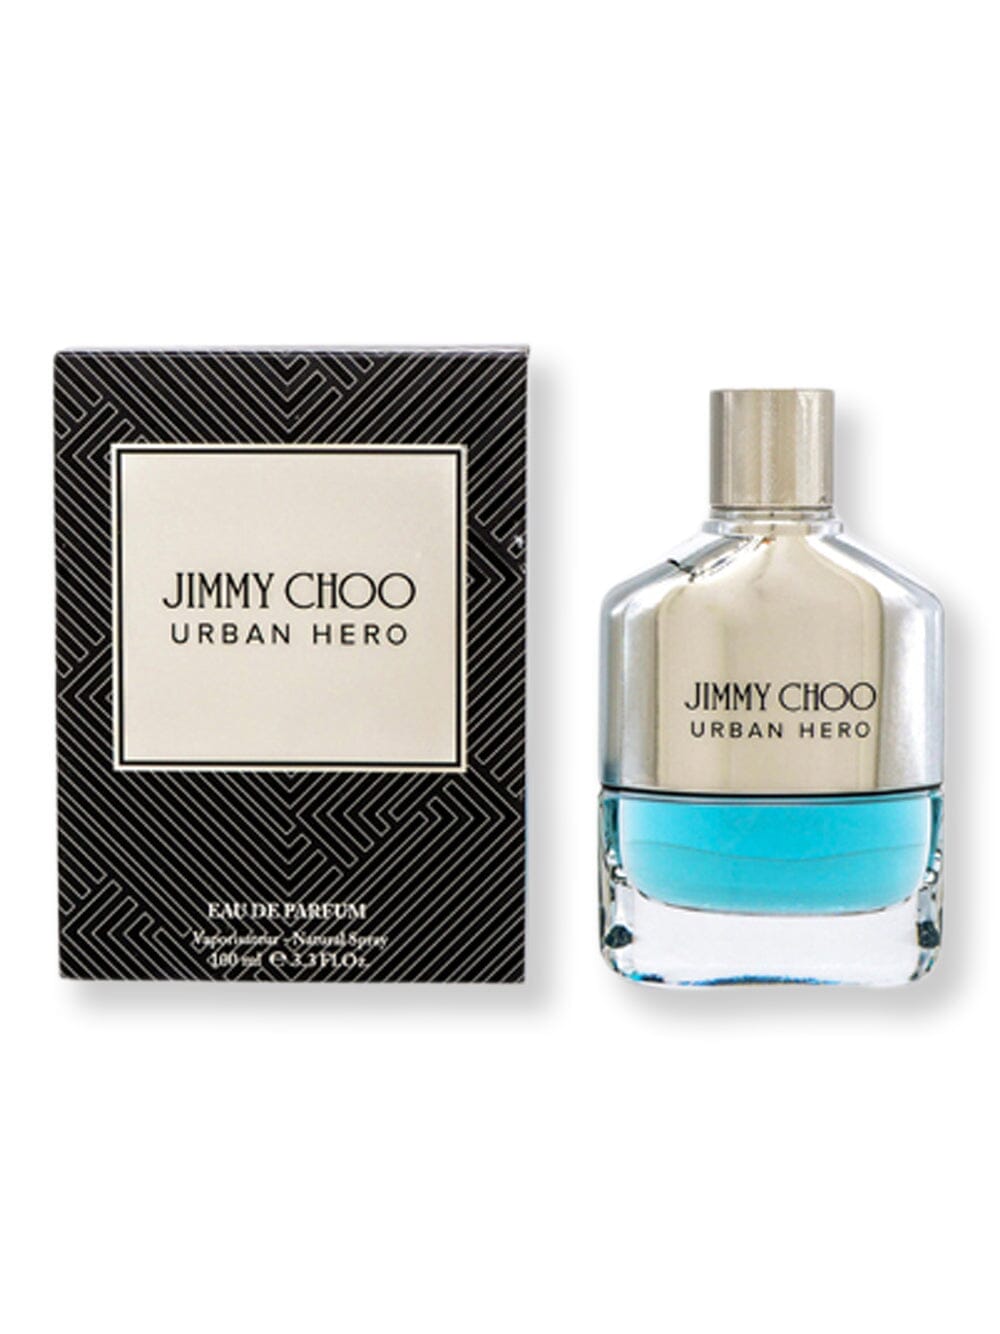 Jimmy Choo Jimmy Choo Urban Hero EDP Spray 3.3 oz100 ml Perfume 